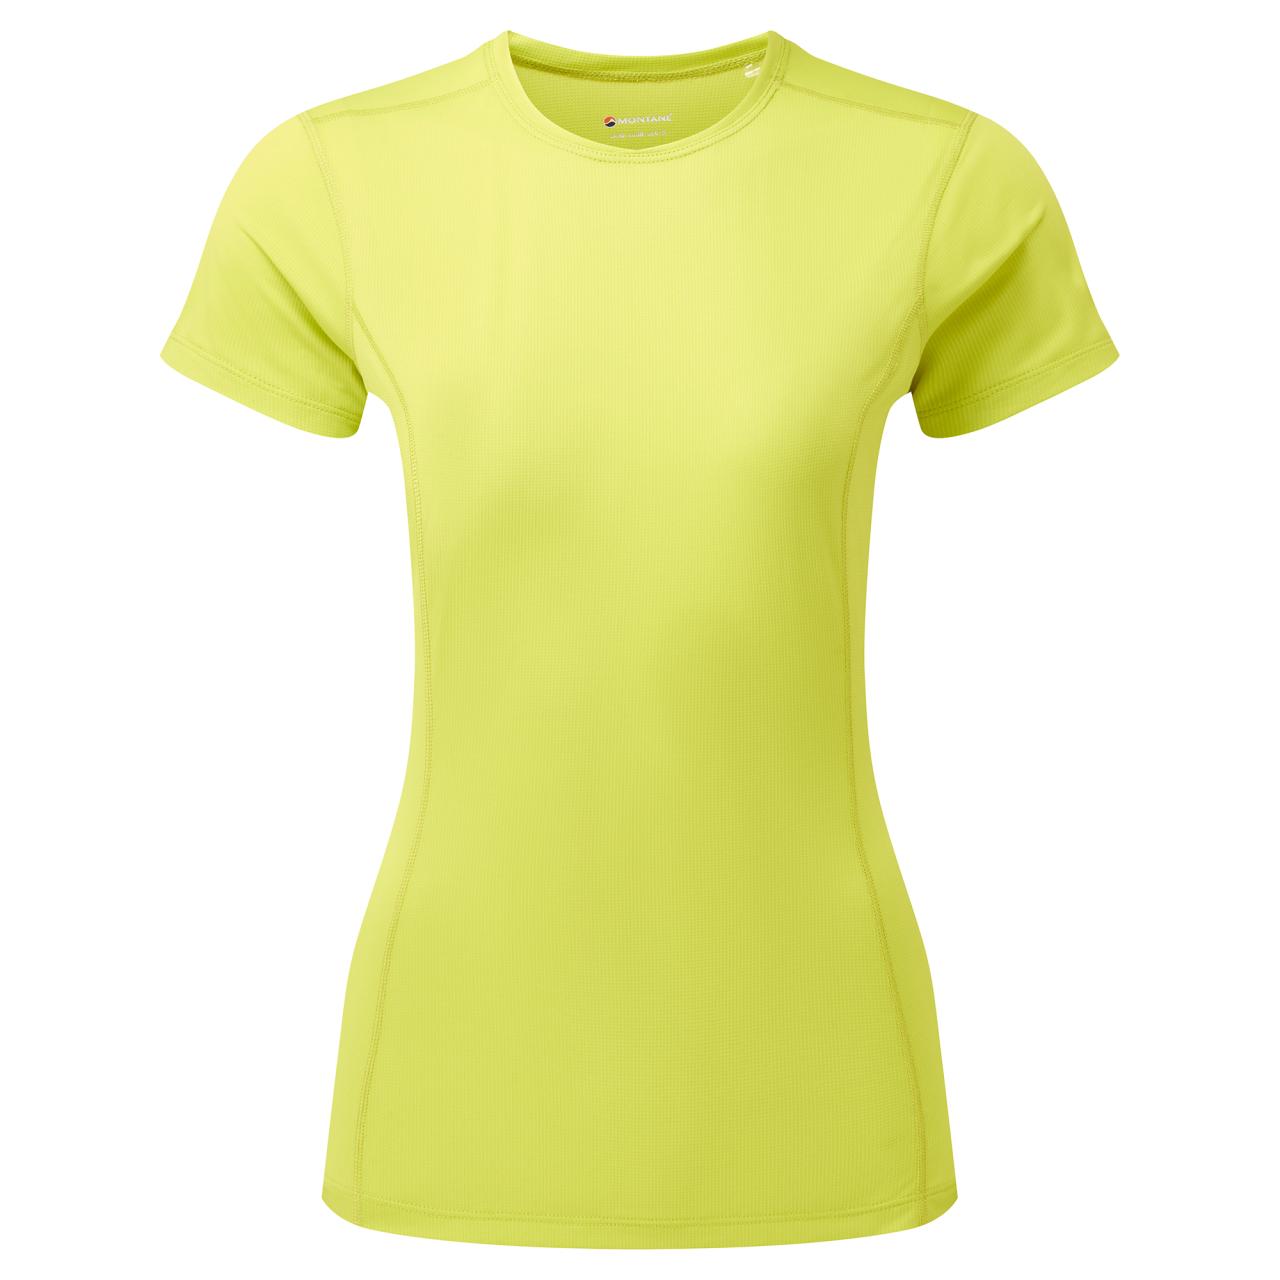 FEM DART LITE T-SHIRT-CITRUS SPRING-UK12/M dámské triko žlutozelené